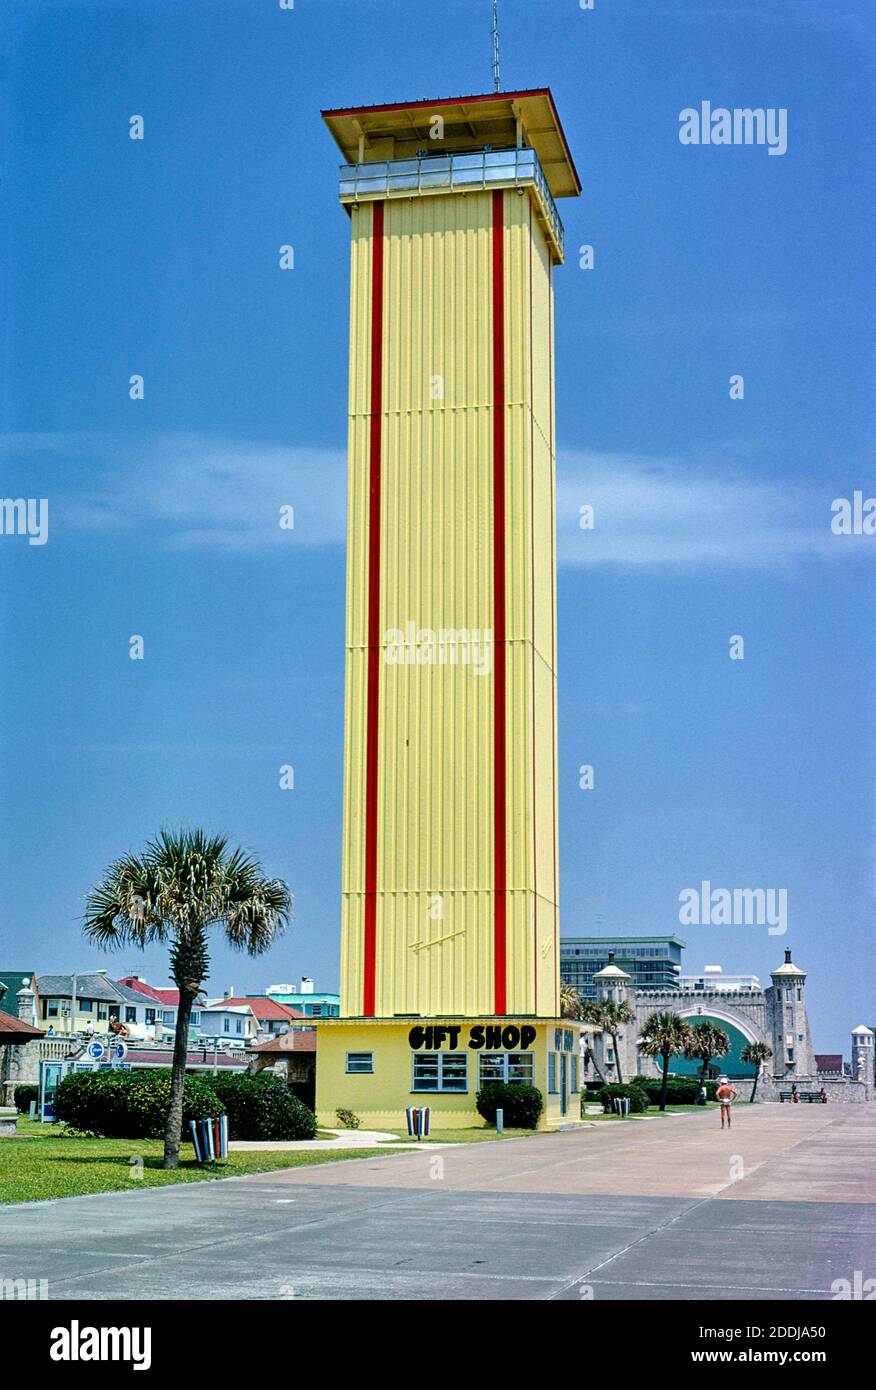 Sky Tower, Daytona Beach, Florida, USA, John Margolies Roadside America Fotografia Archivio, 1979 Foto Stock